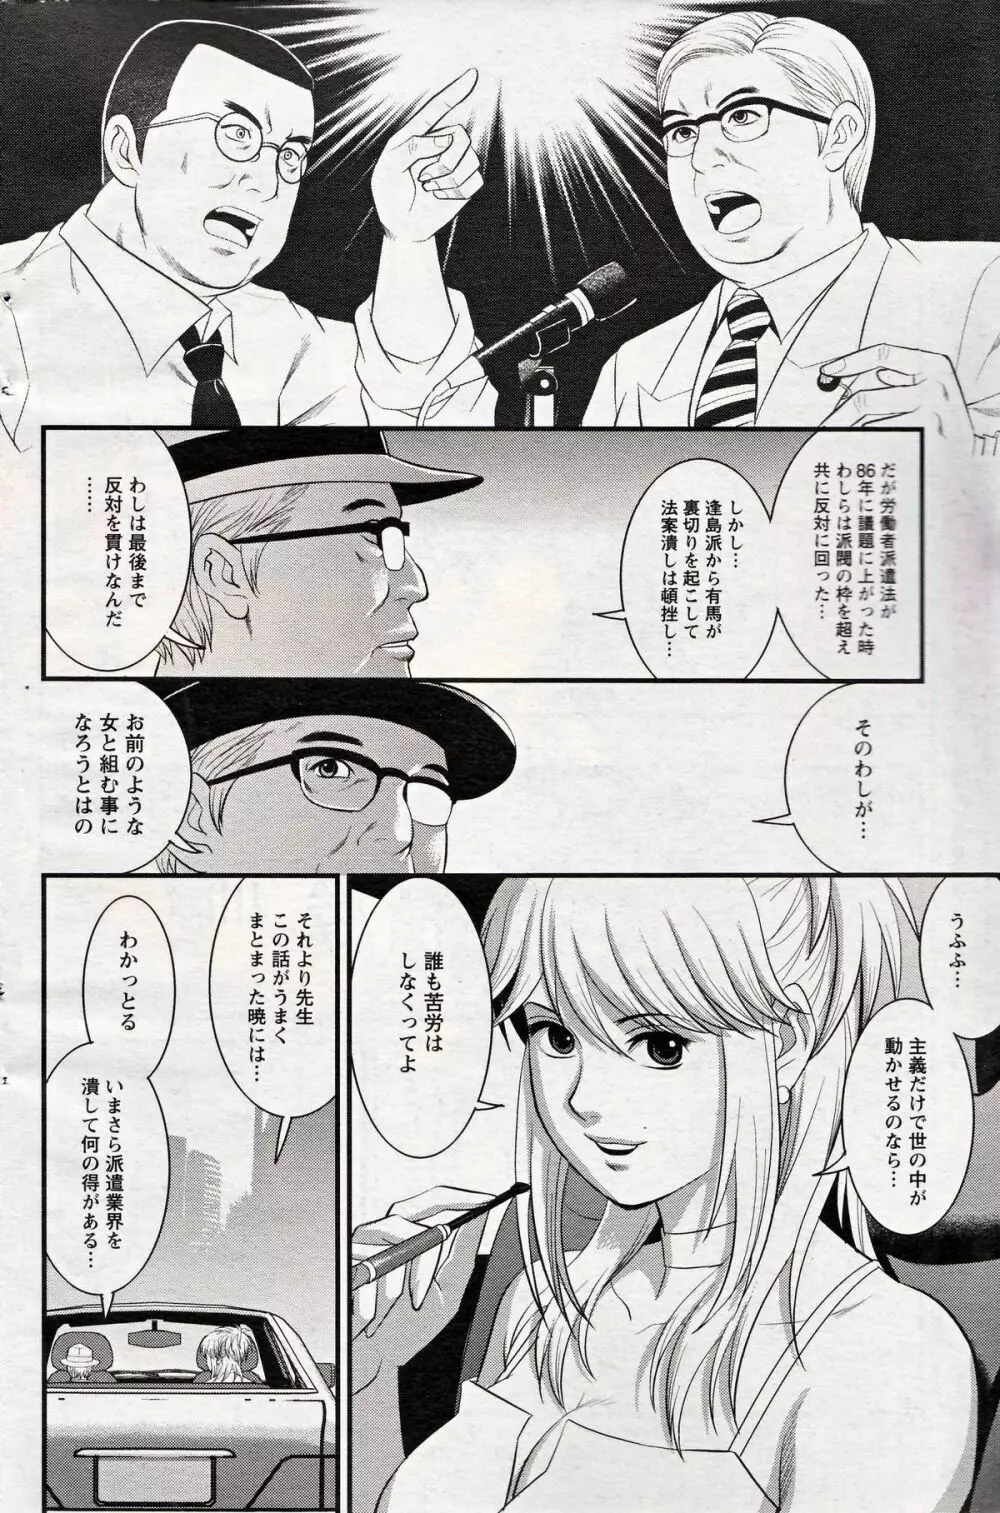 Haken no Muuko-san 19 10ページ